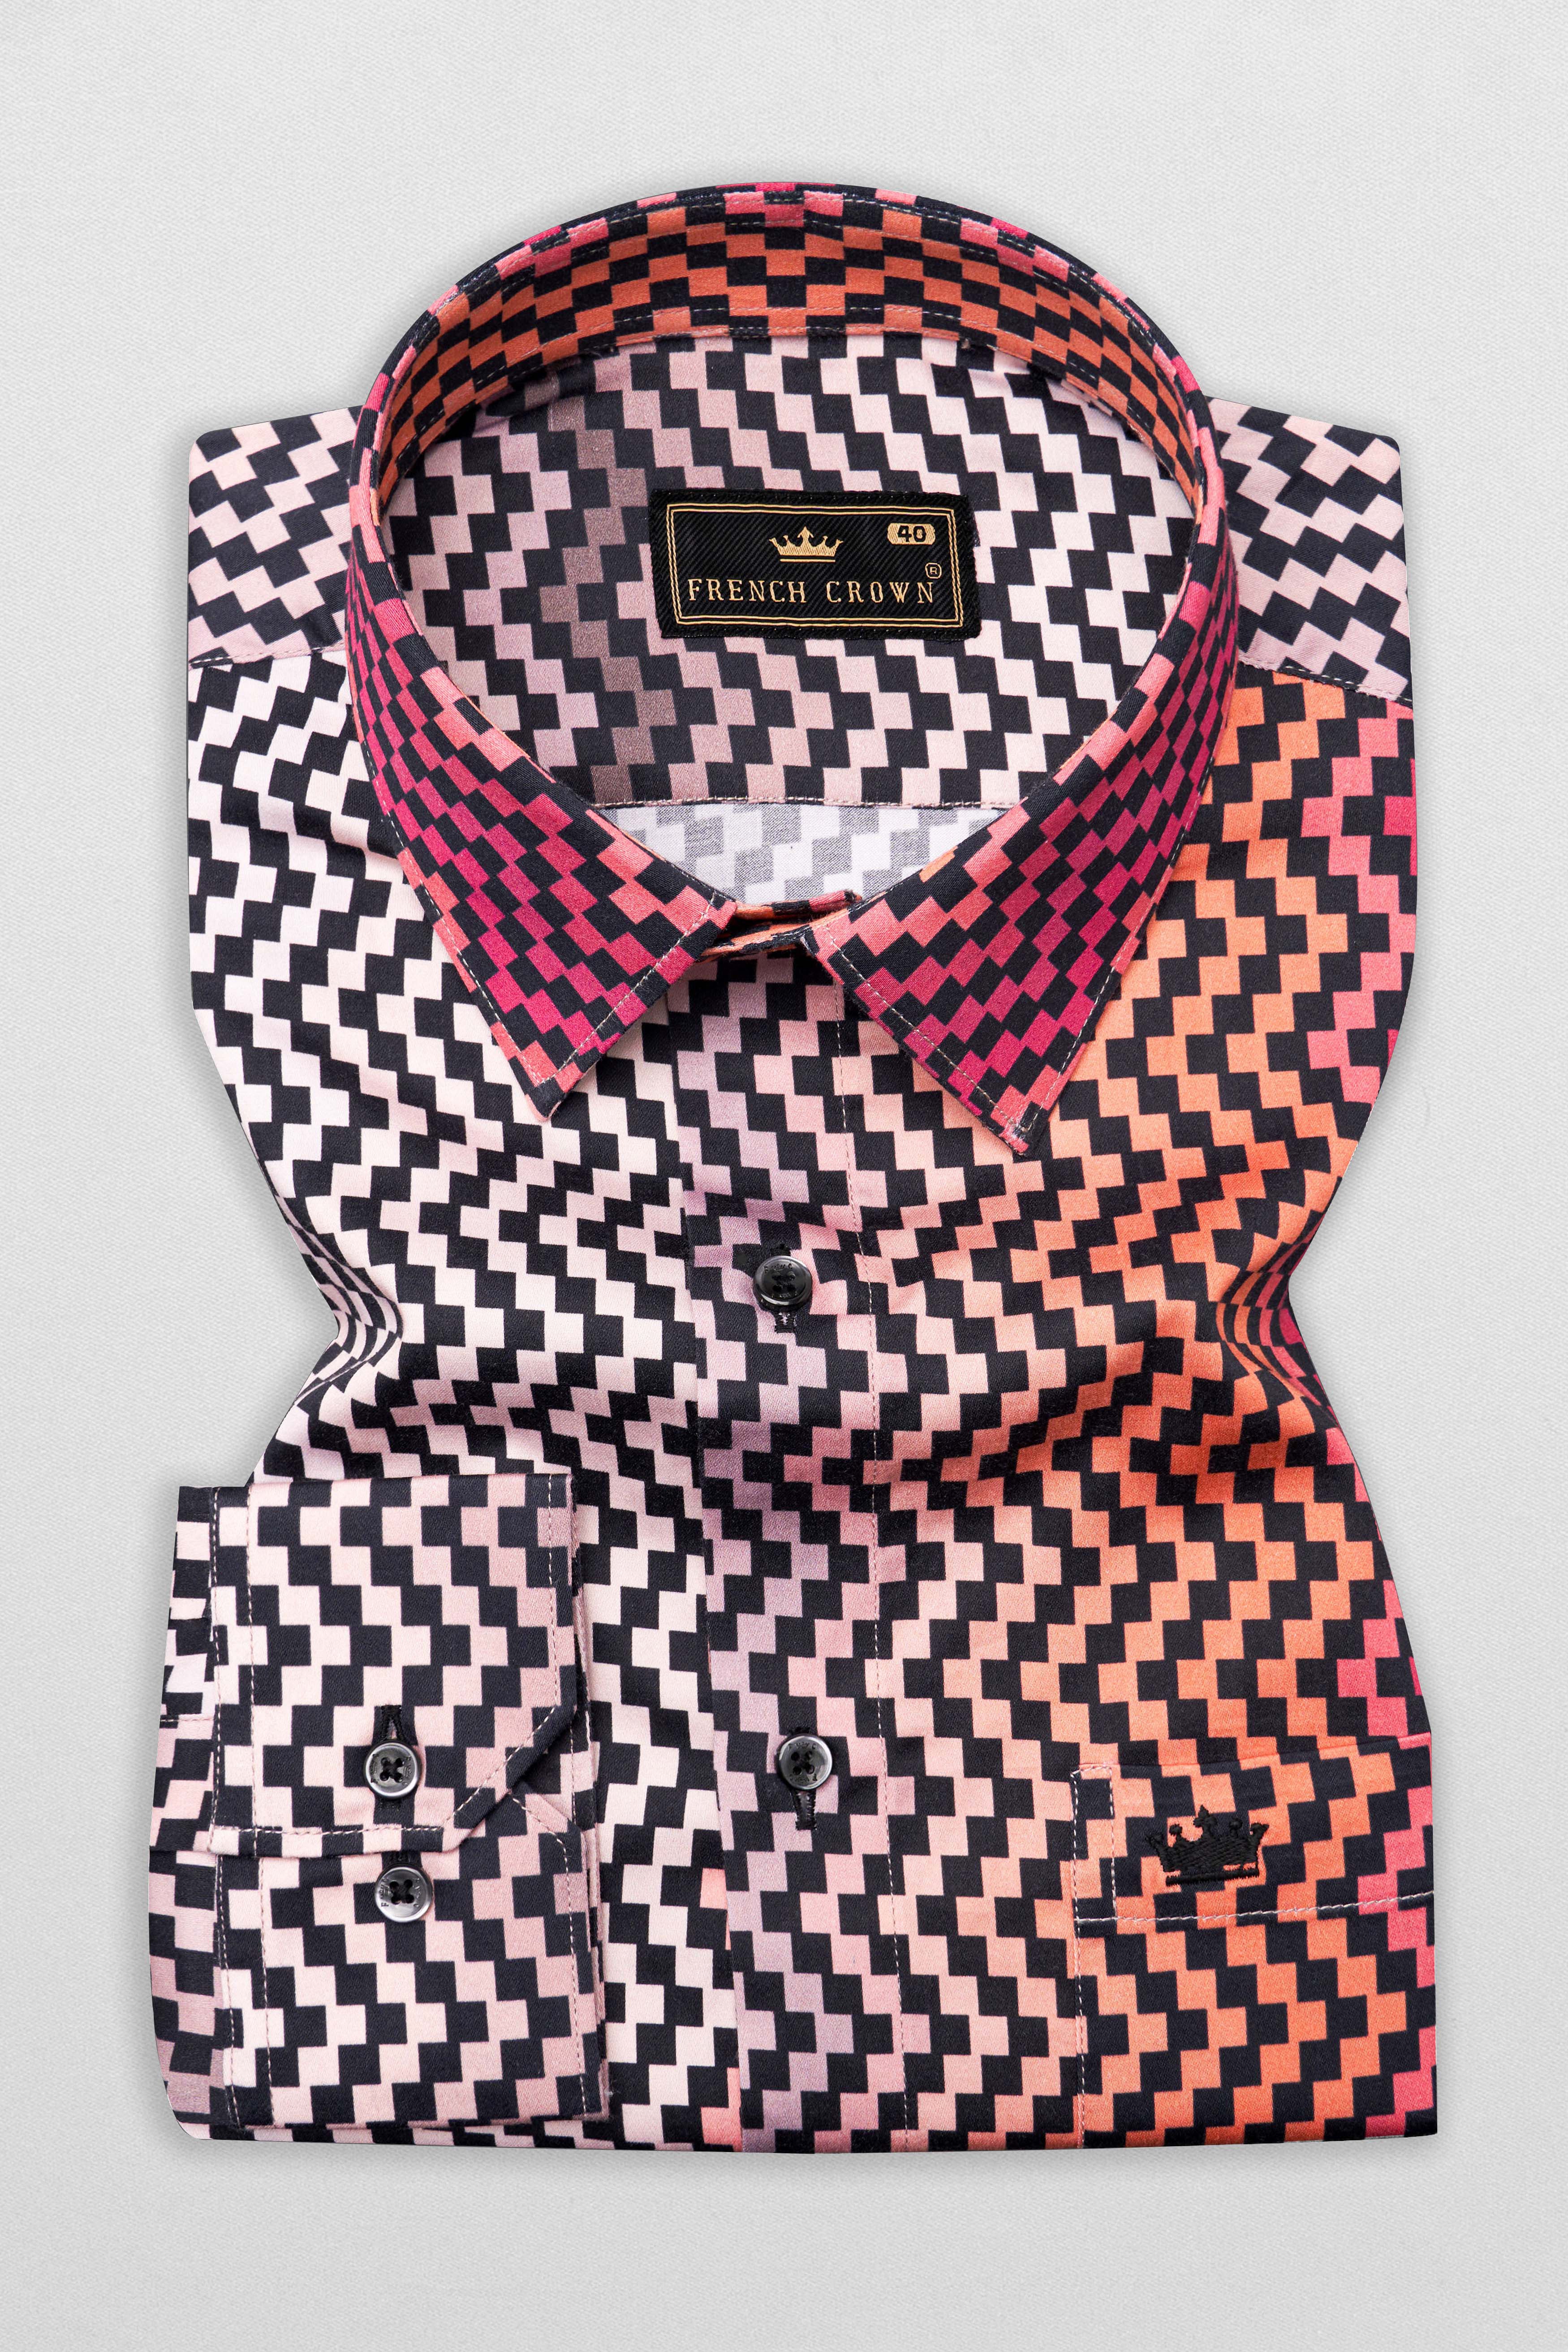 Reddish with Black Multicolour Chessboard Pattern Super Soft Premium Cotton Shirt